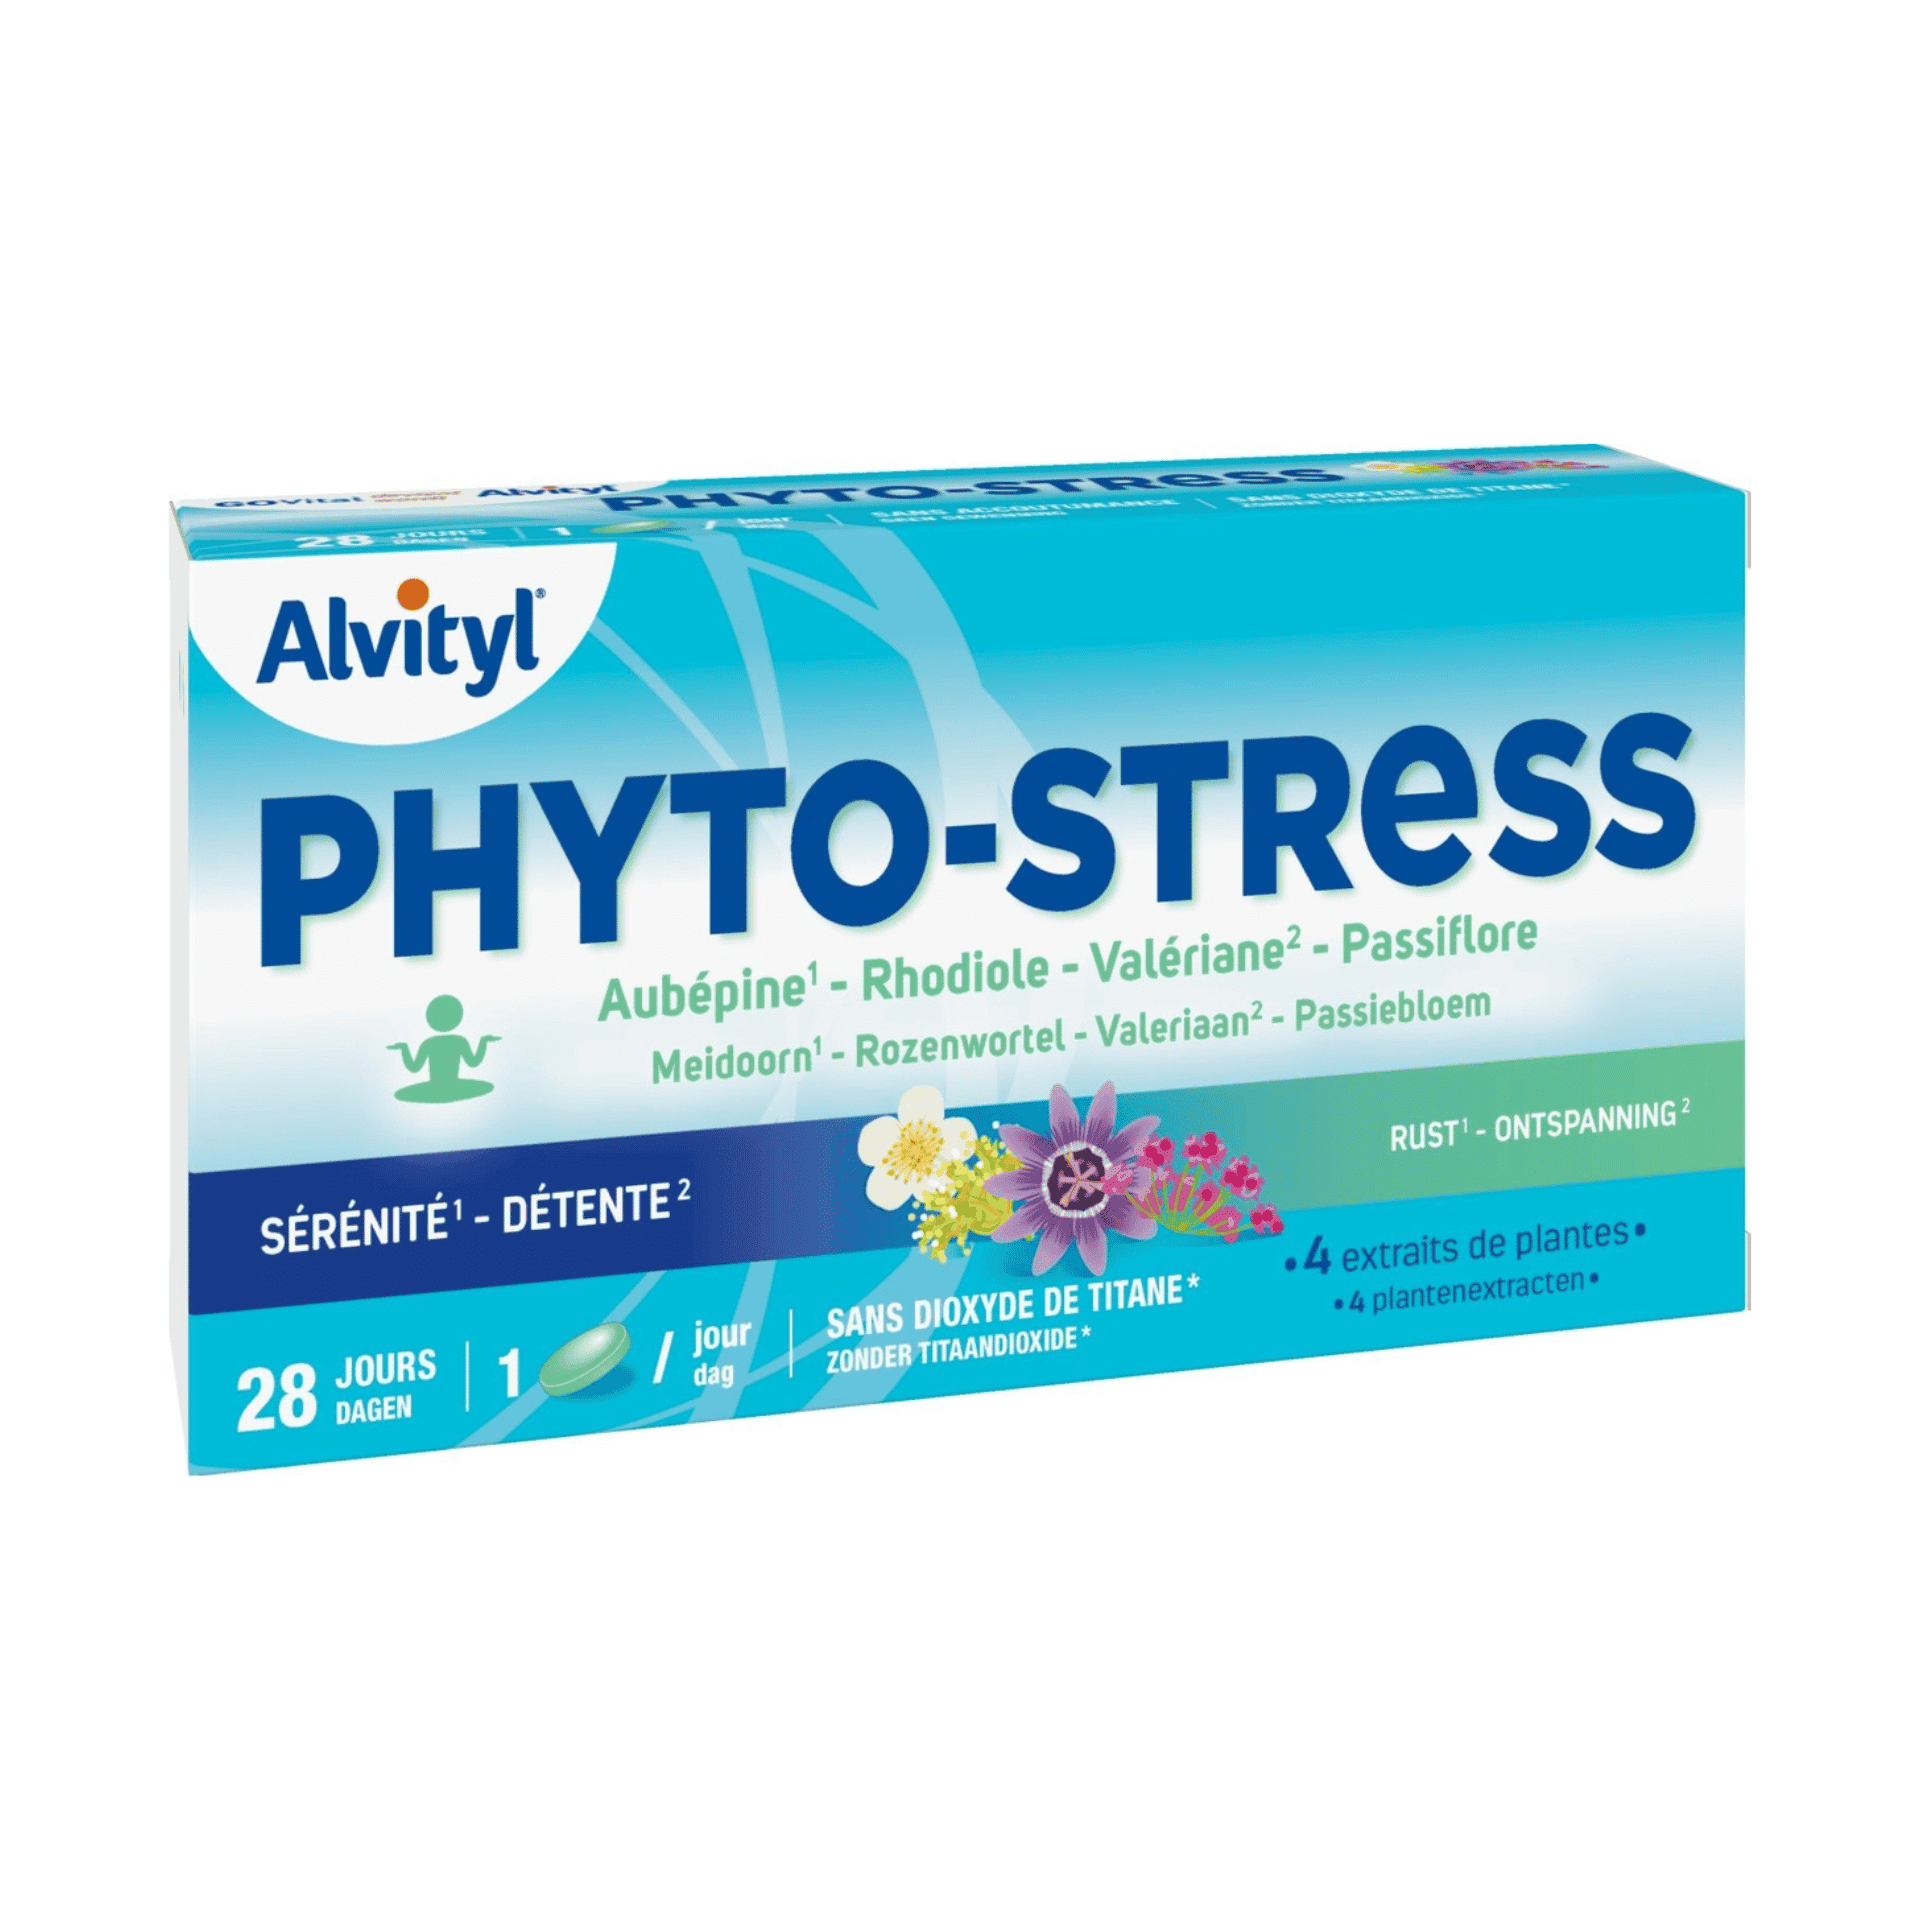 Alvityl Phyto-Stress